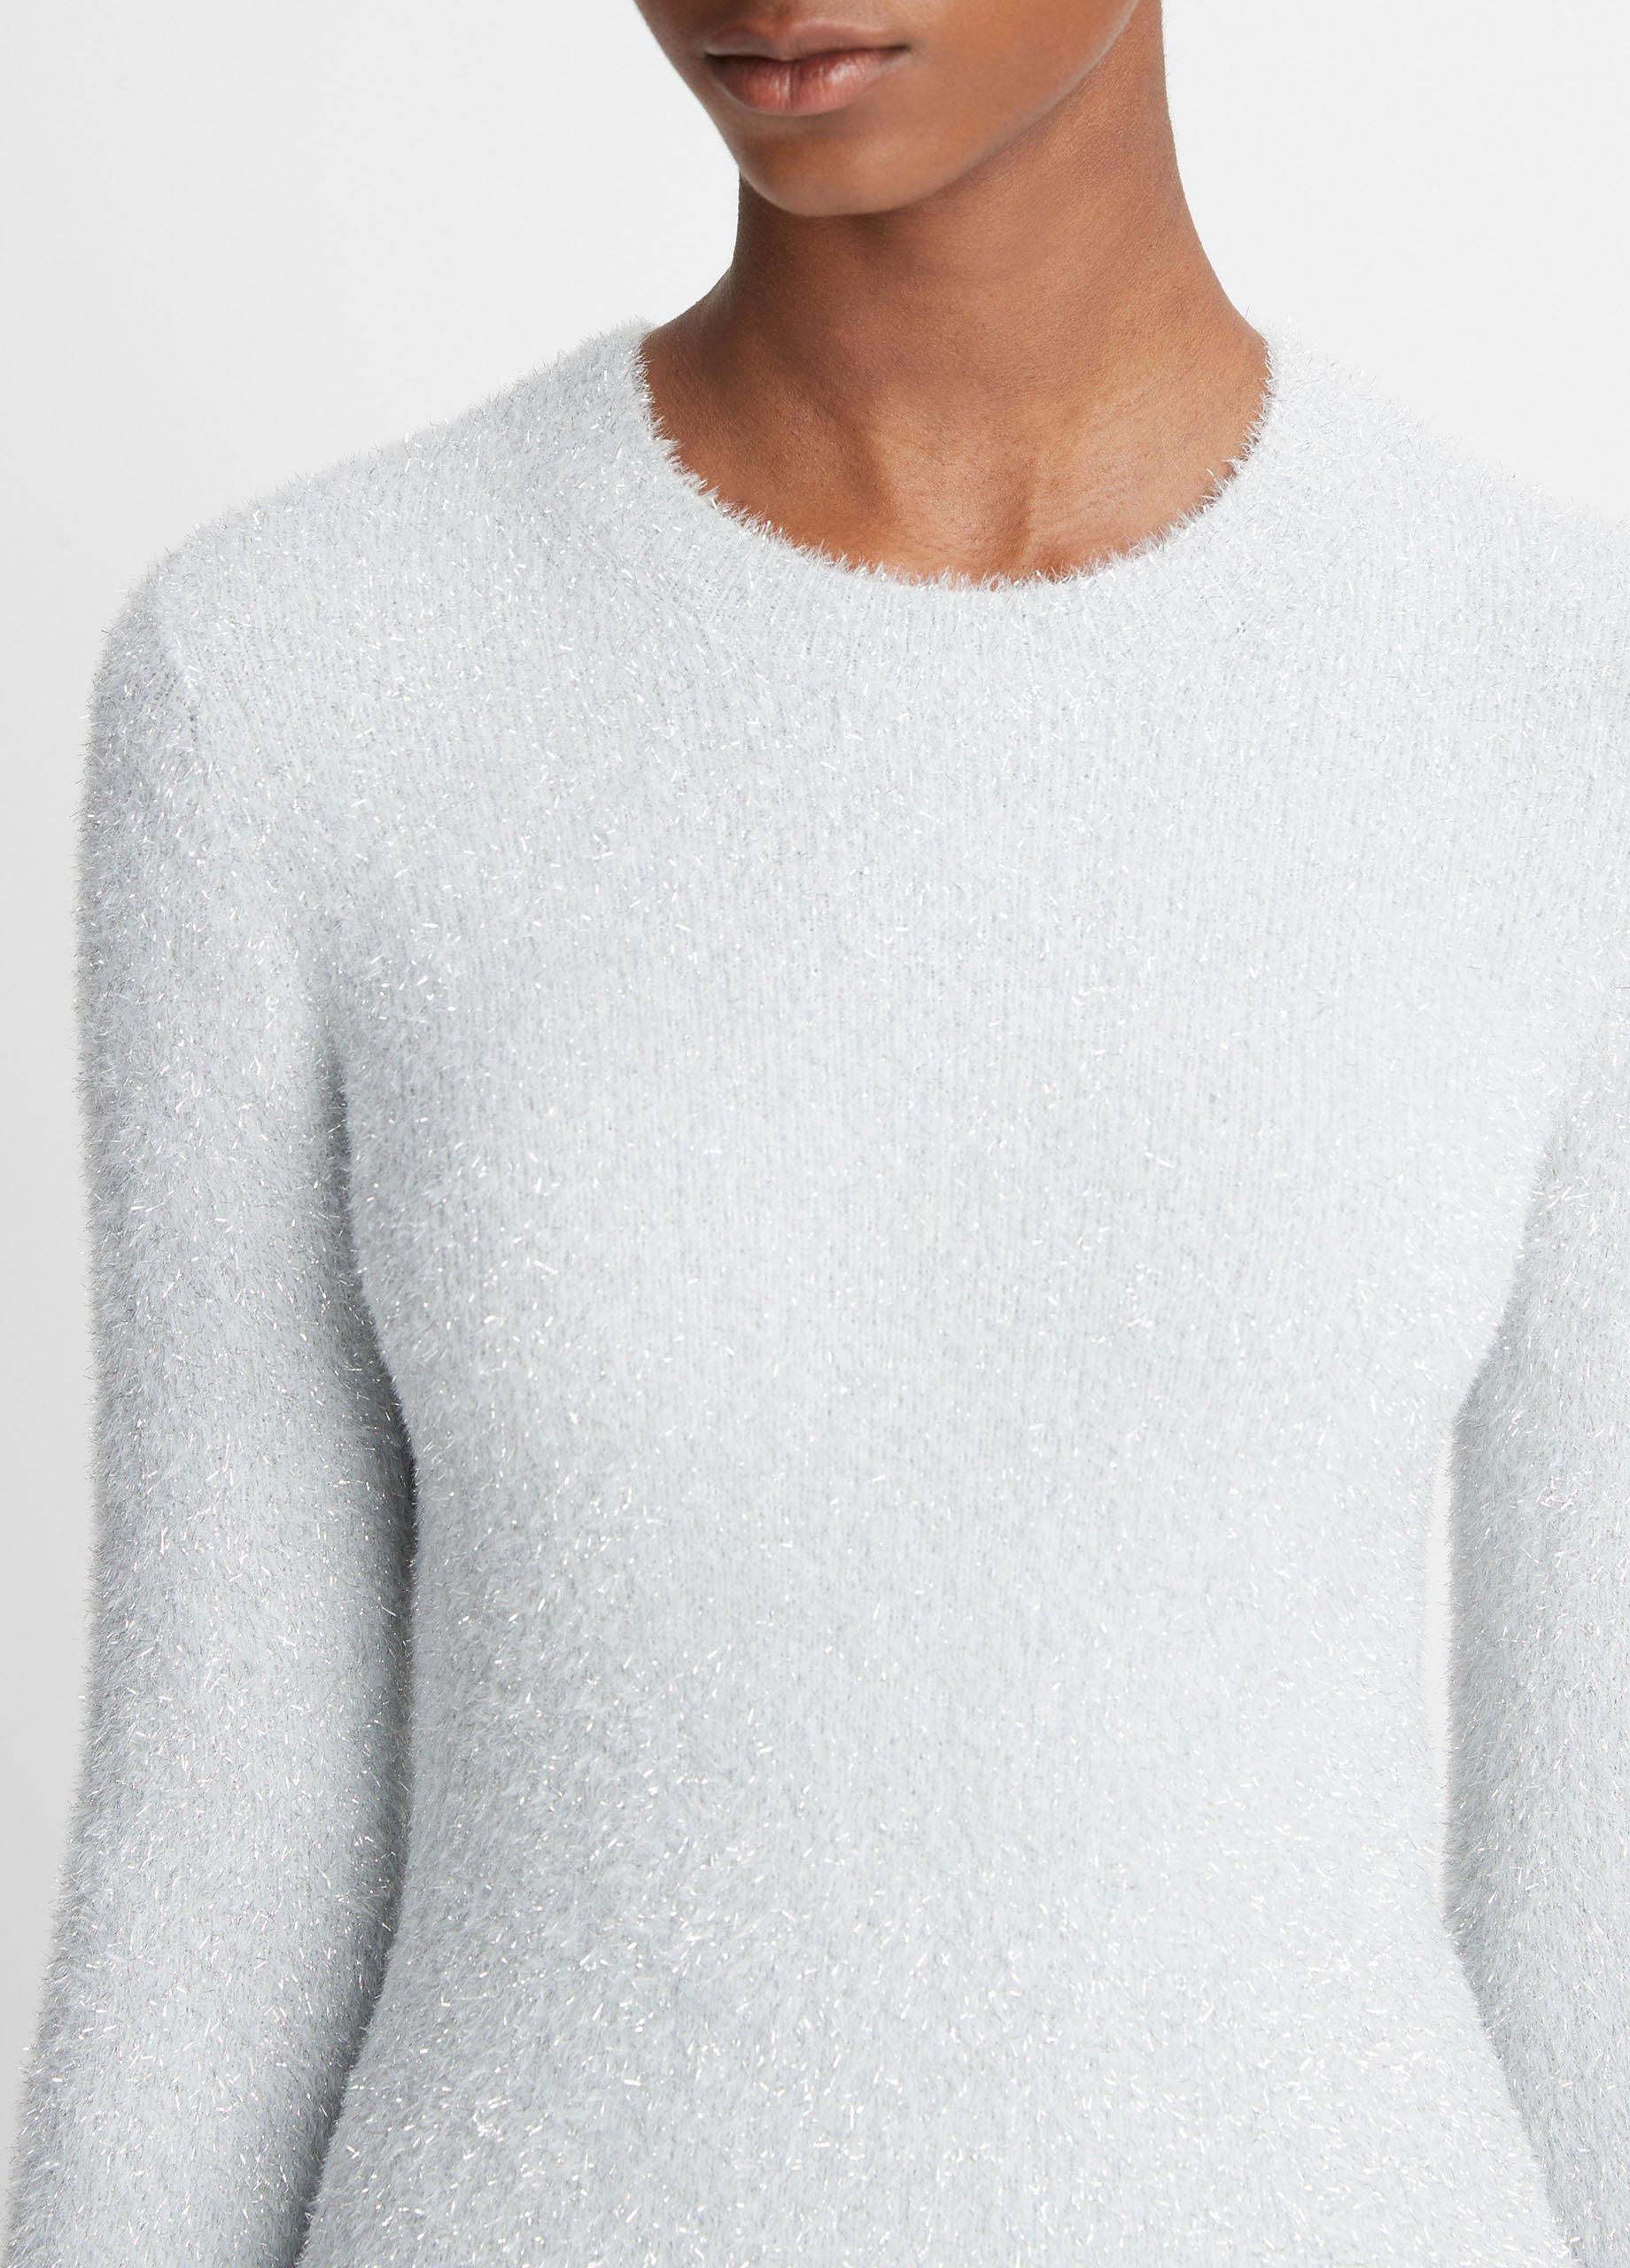 67◇A.PRESSE Pullover Sweater UT0325-1droman